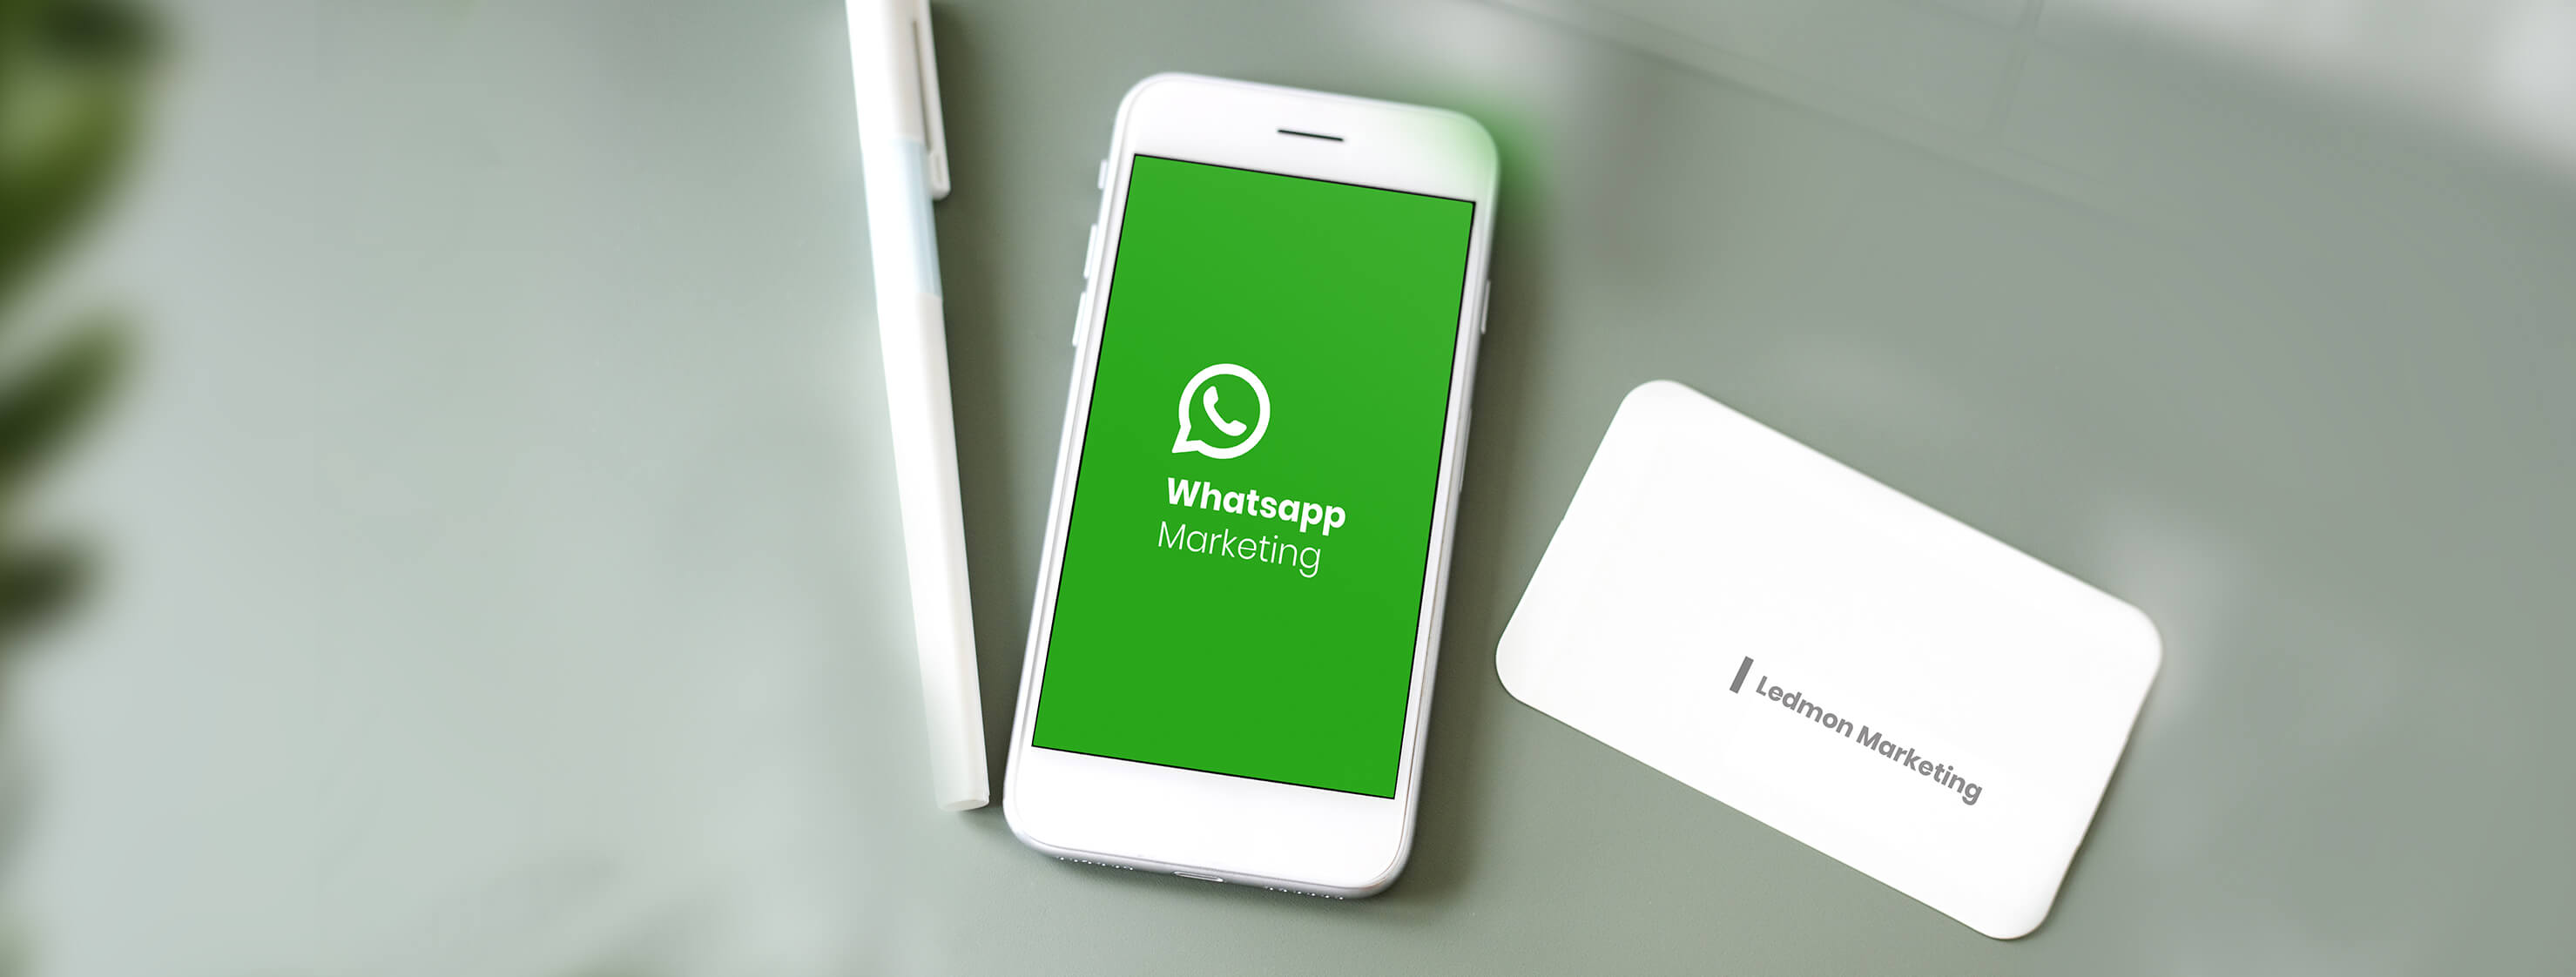 Whatsapp Marketing, otra forma de comunicar